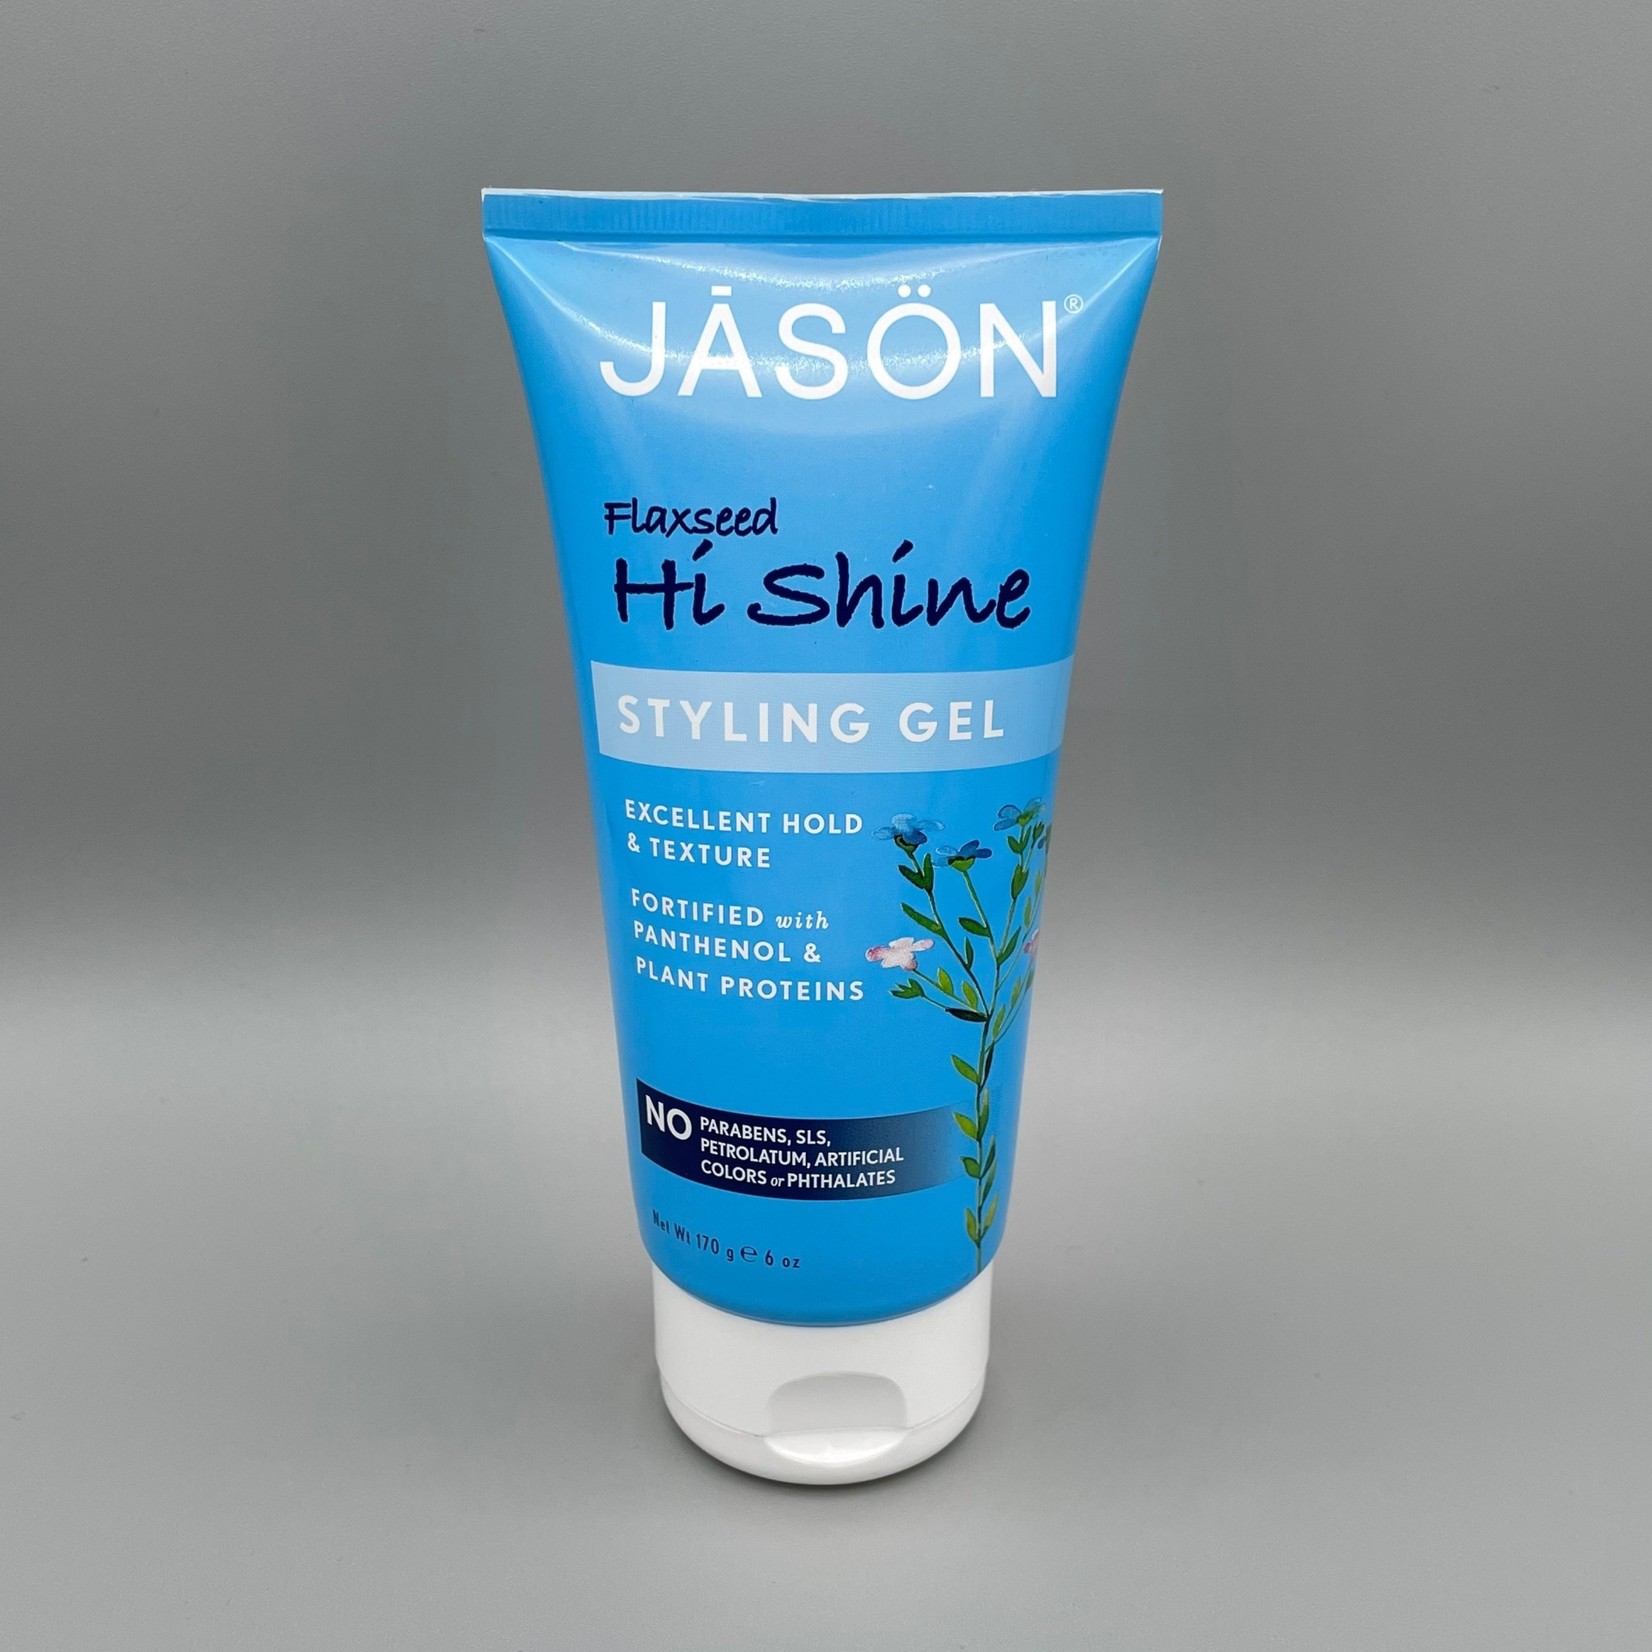 JASON Styling Gel - Hi Shine Flaxseed